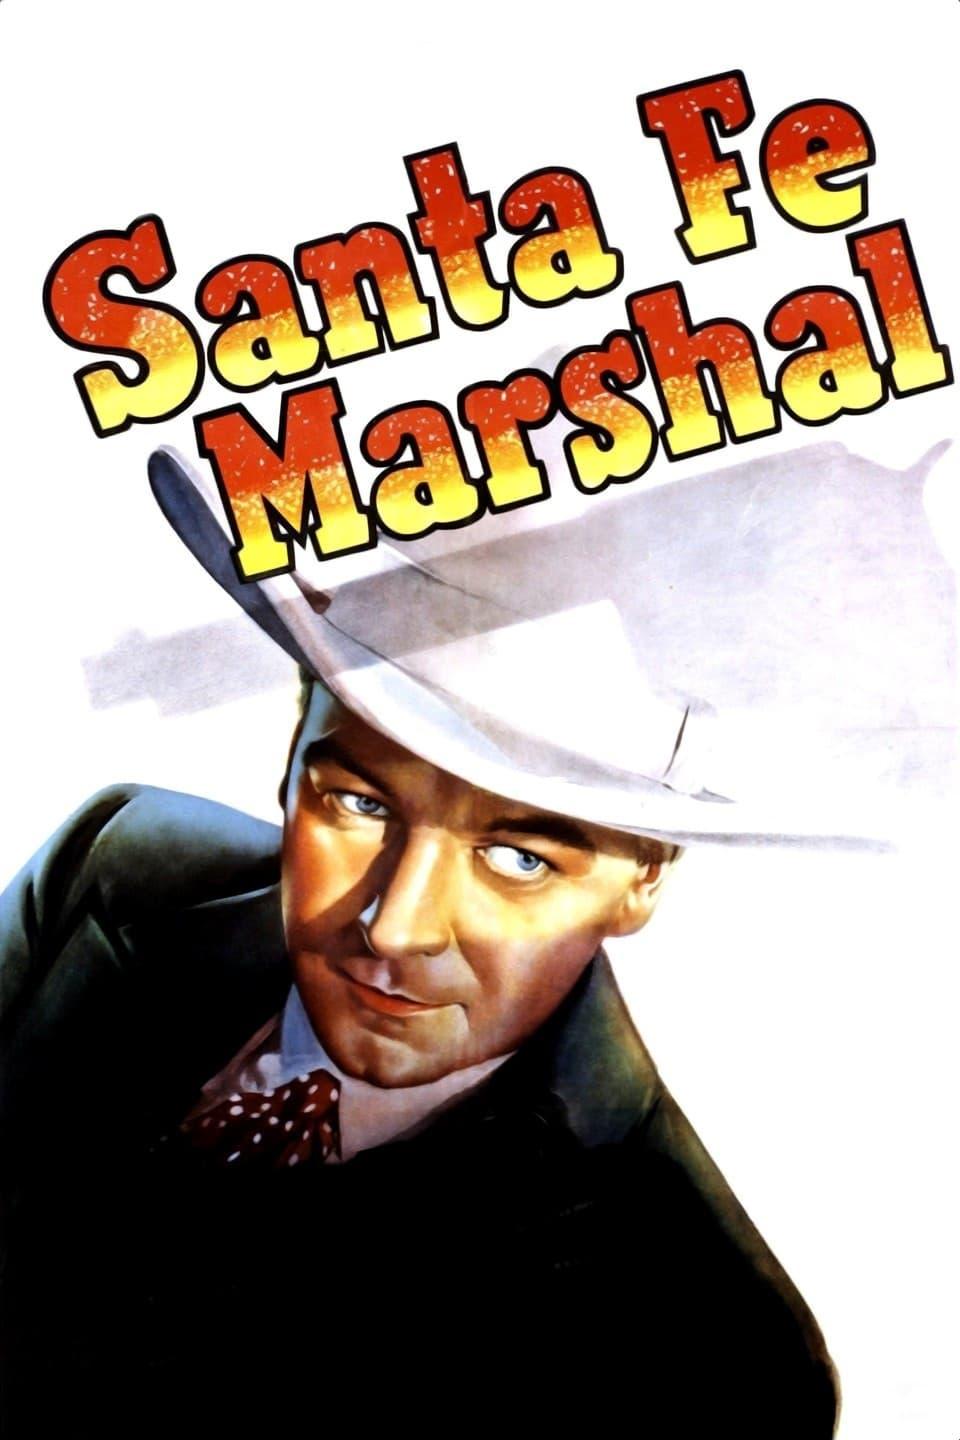 Santa Fe Marshal poster